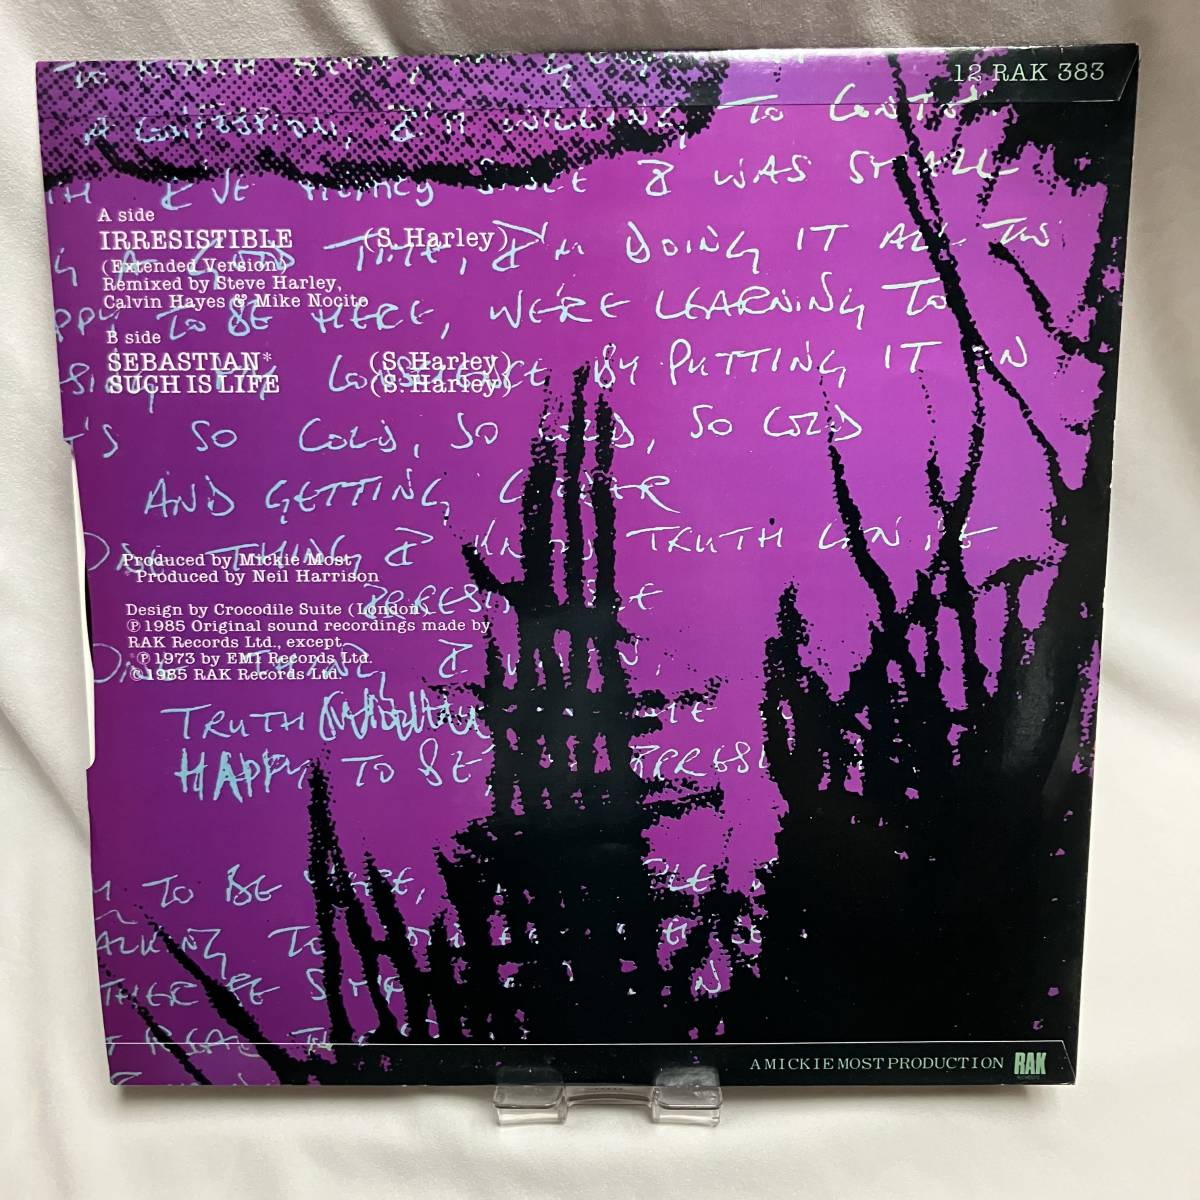  foreign record Steve Harley Irresistible 12 -inch EP single record Orig. Steve Harley & Cockney Rebel Steve * Harley i& cook knee Revell 